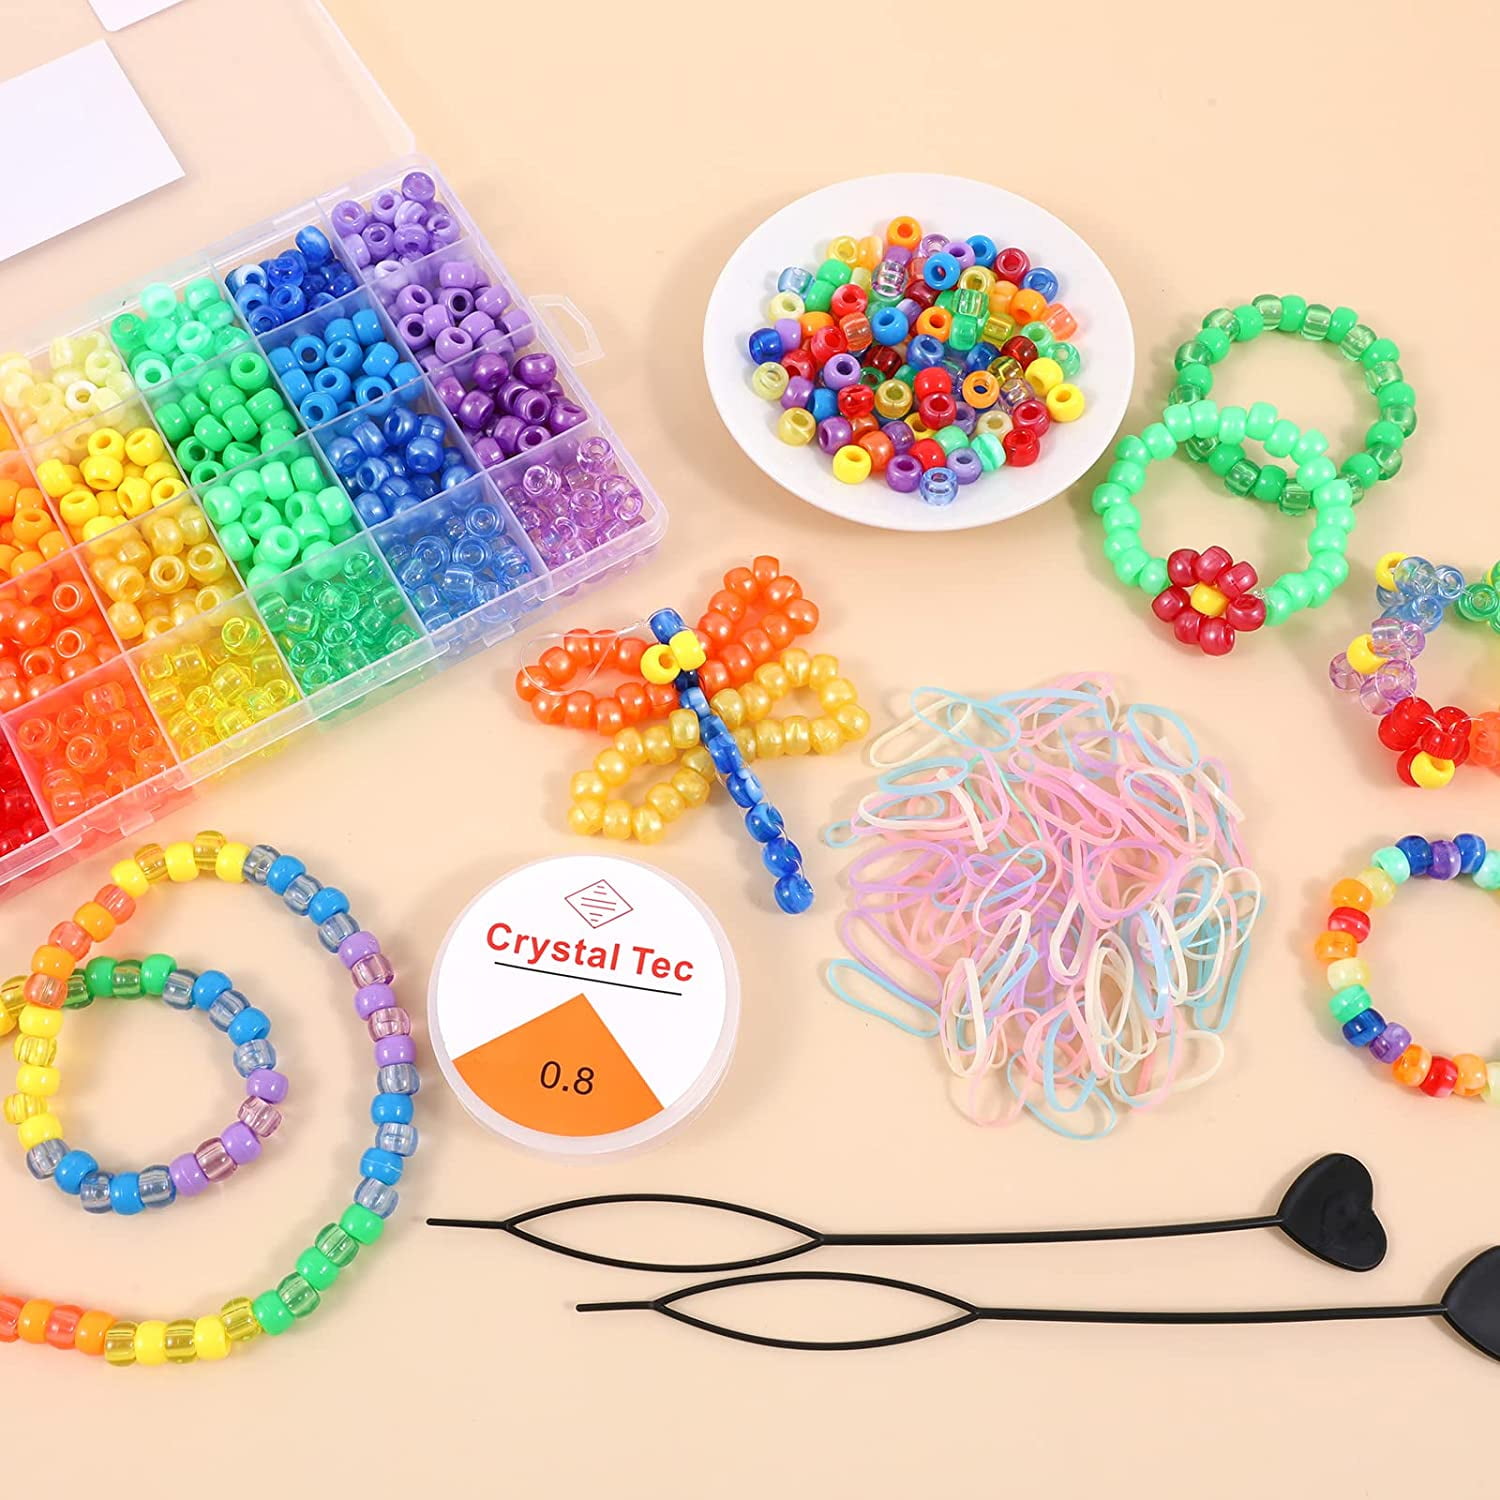 Rainbow Pony Bead Bracelet - Crafts by Amanda